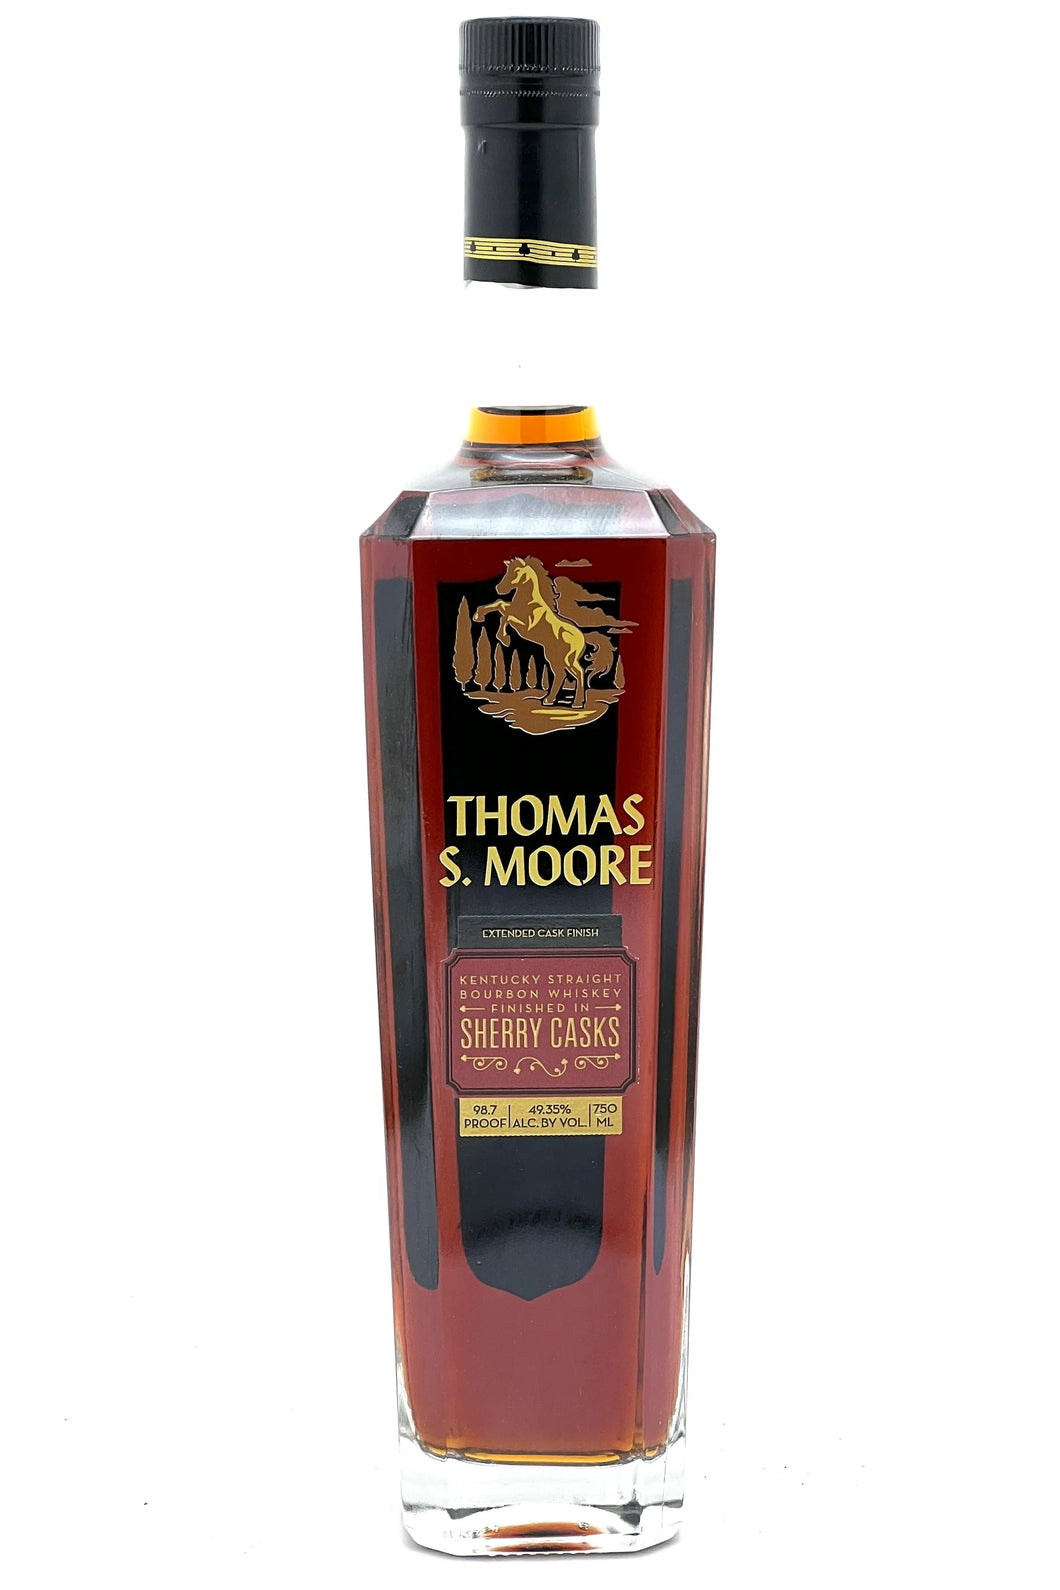 Thomas S. Moore Sherry Cask Bourbon